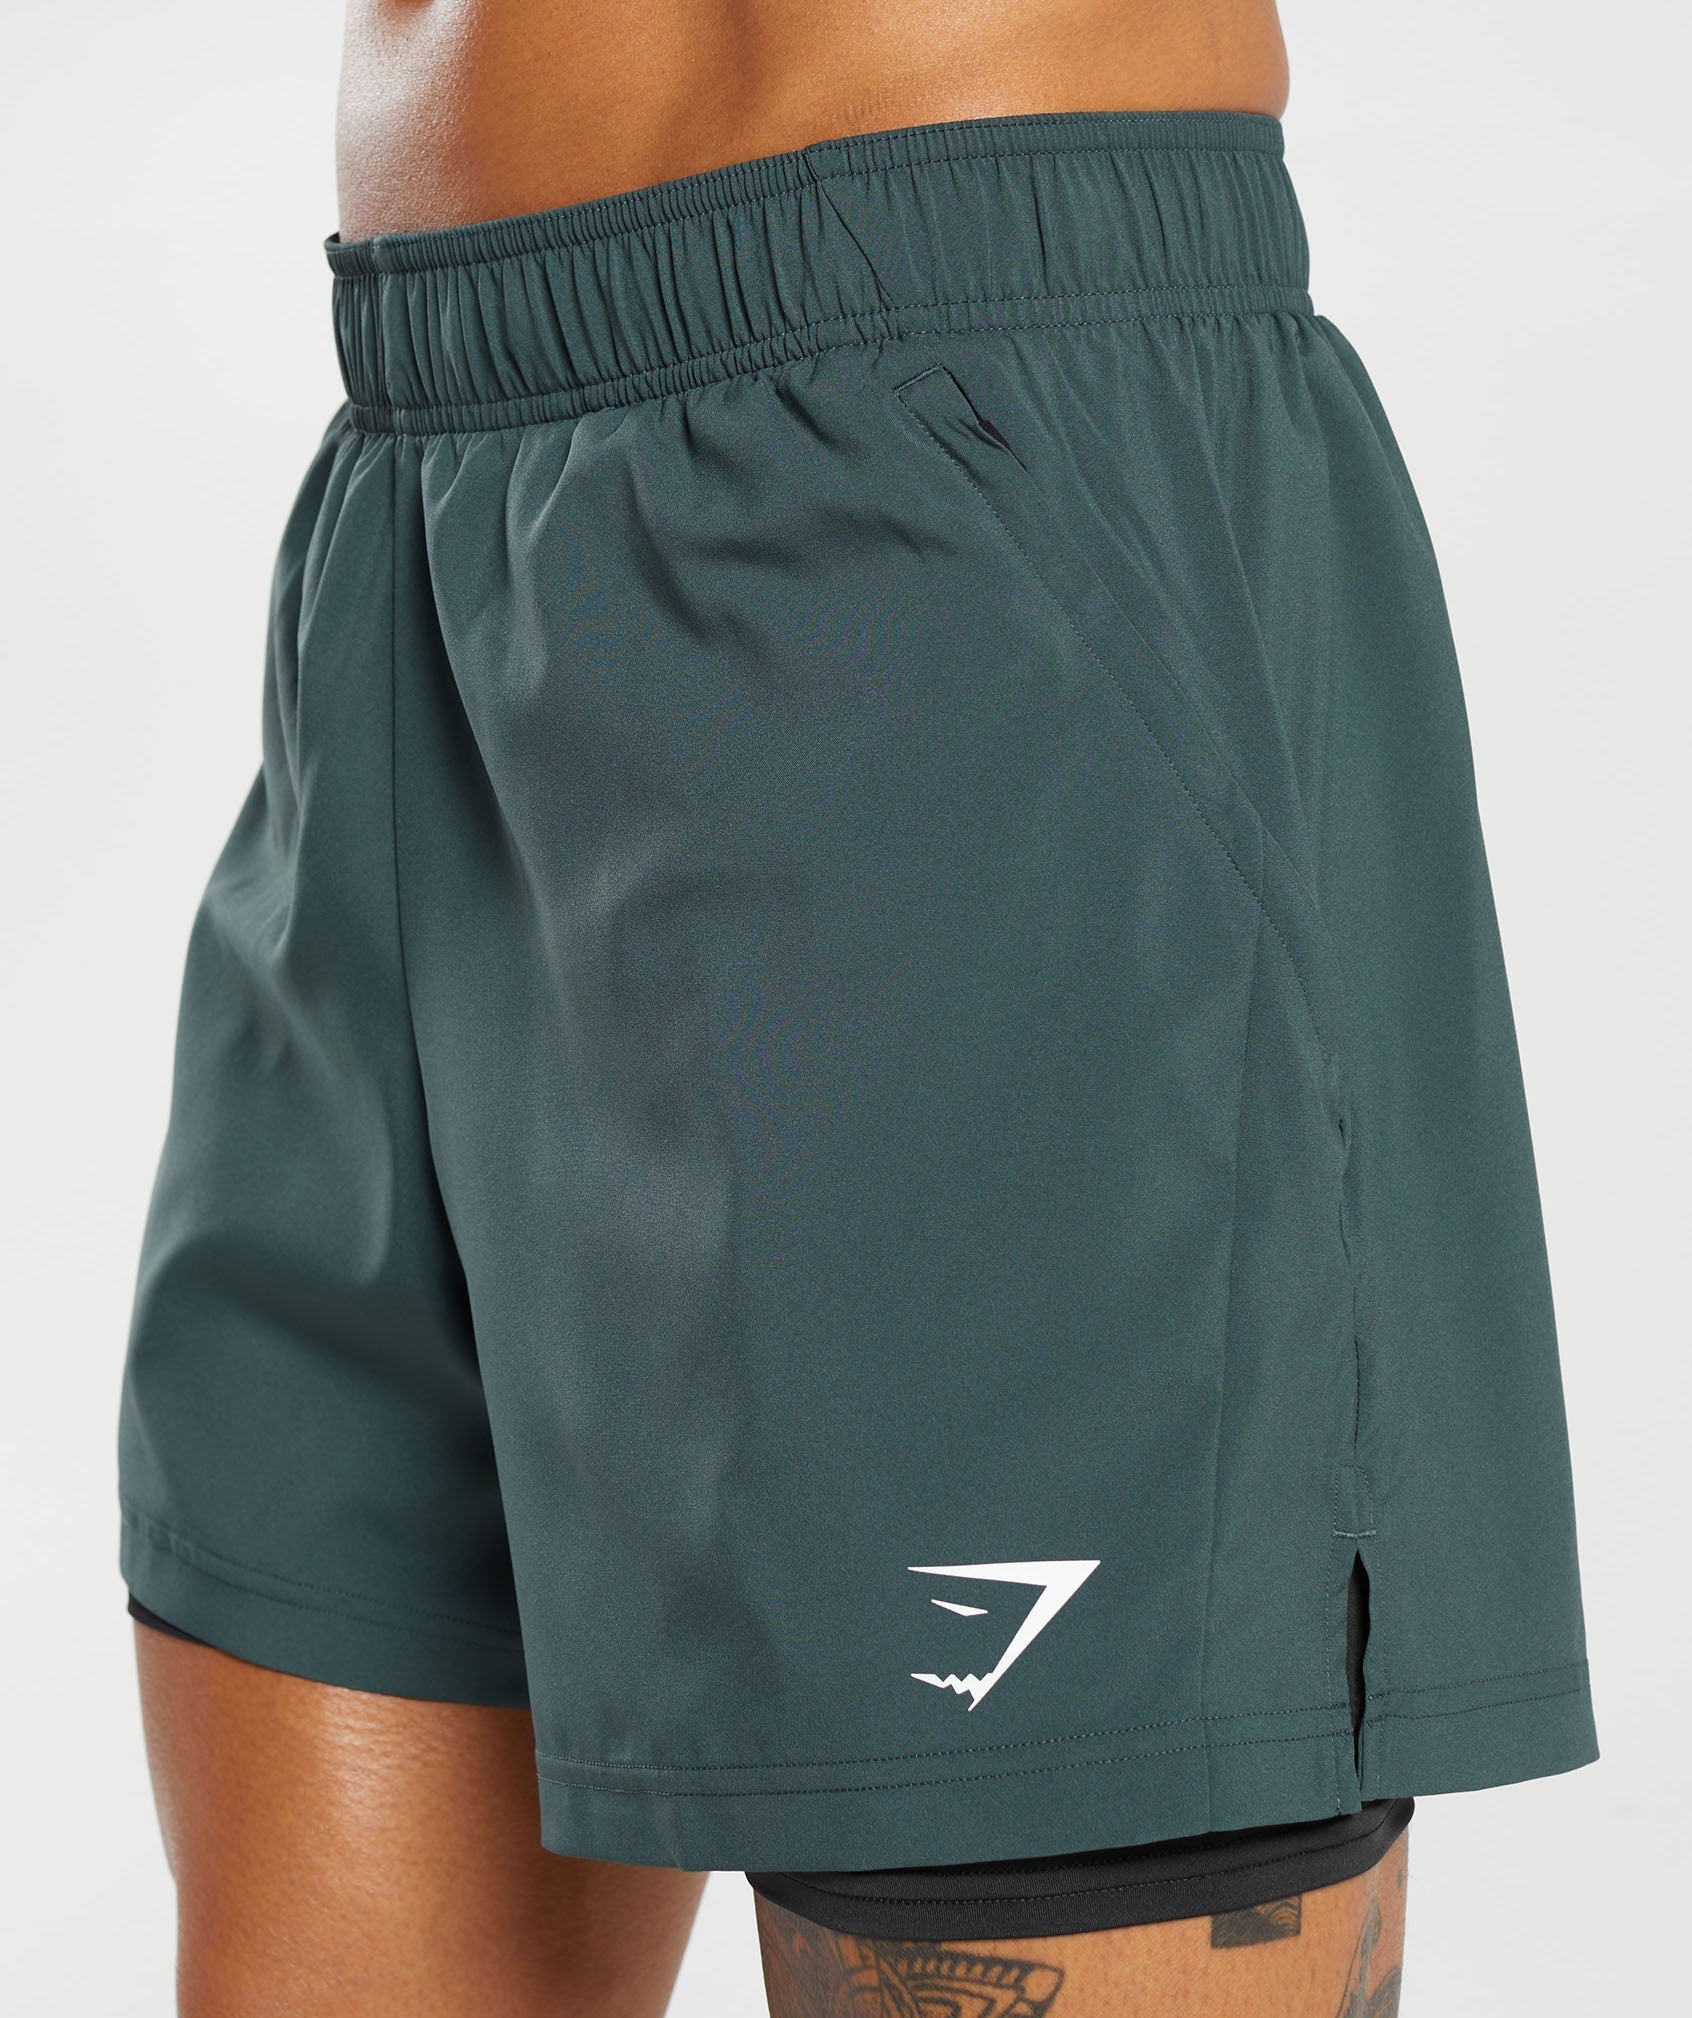 Sport 5" 2 in 1  Shorts in Fog  Green/Black - view 6